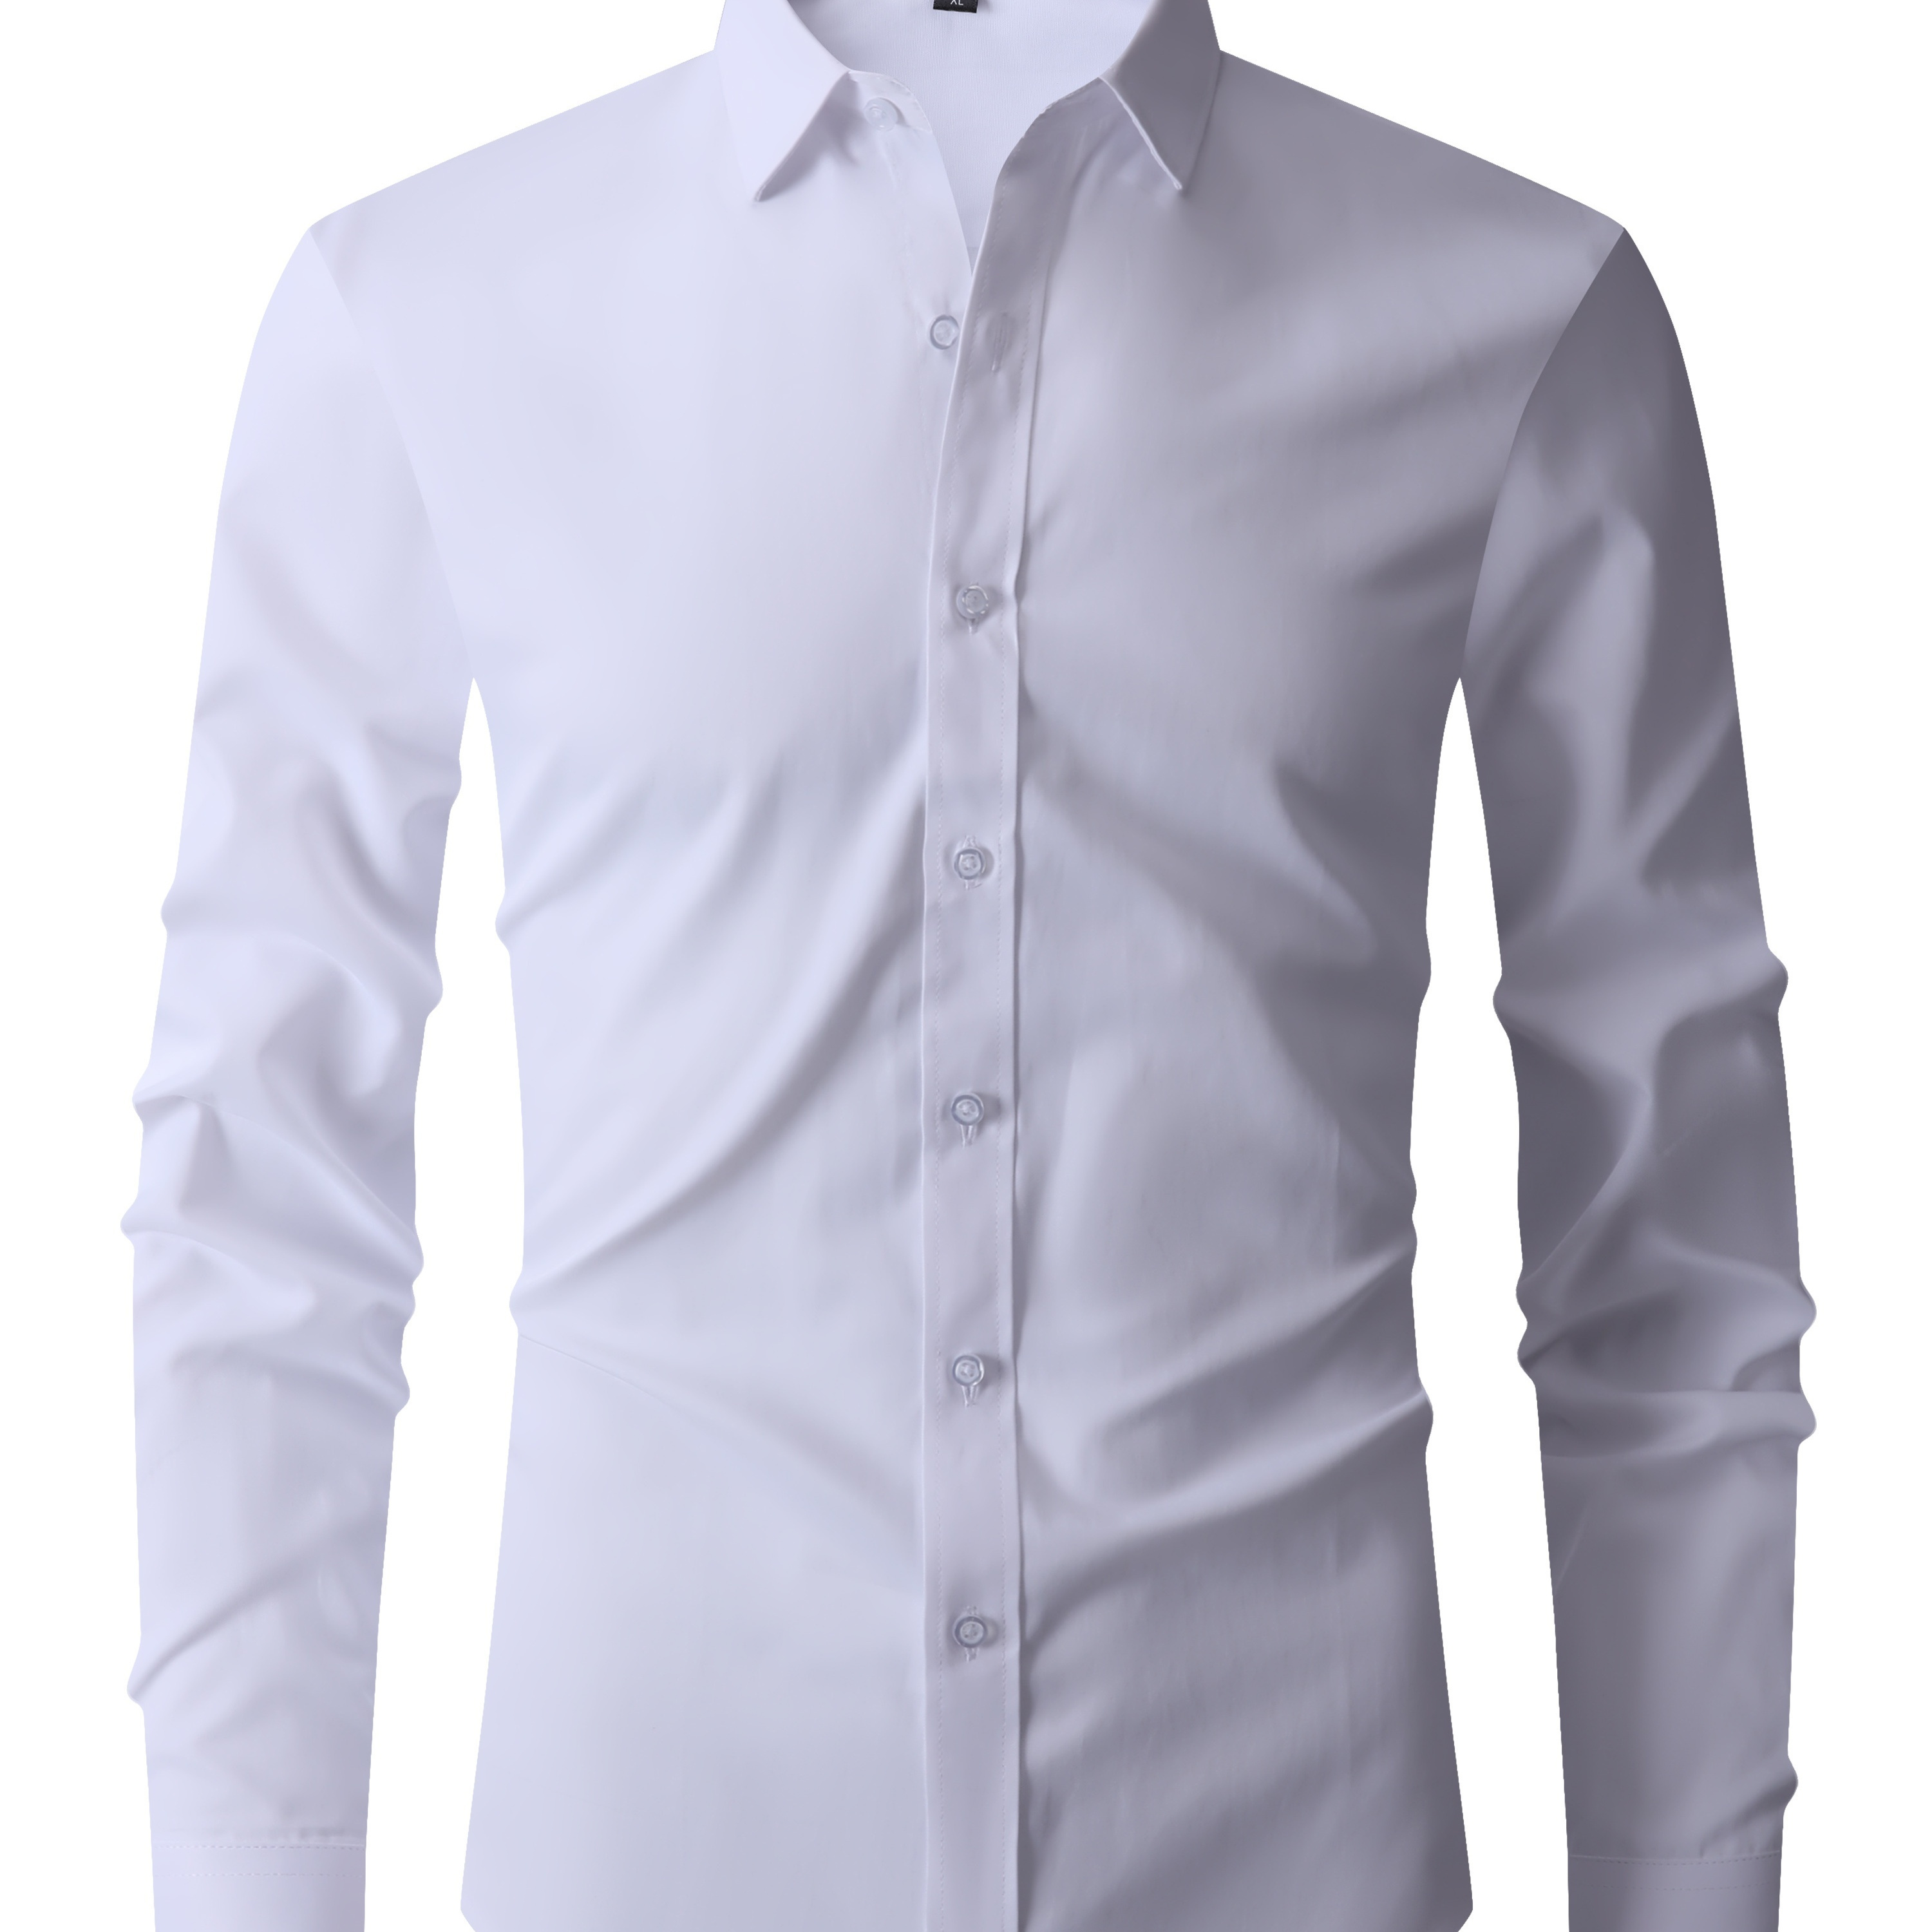 Classic Design Shirt, Men's Semi-formal Button Up Lapel Long Sleeve Shirt For Spring Summer Business